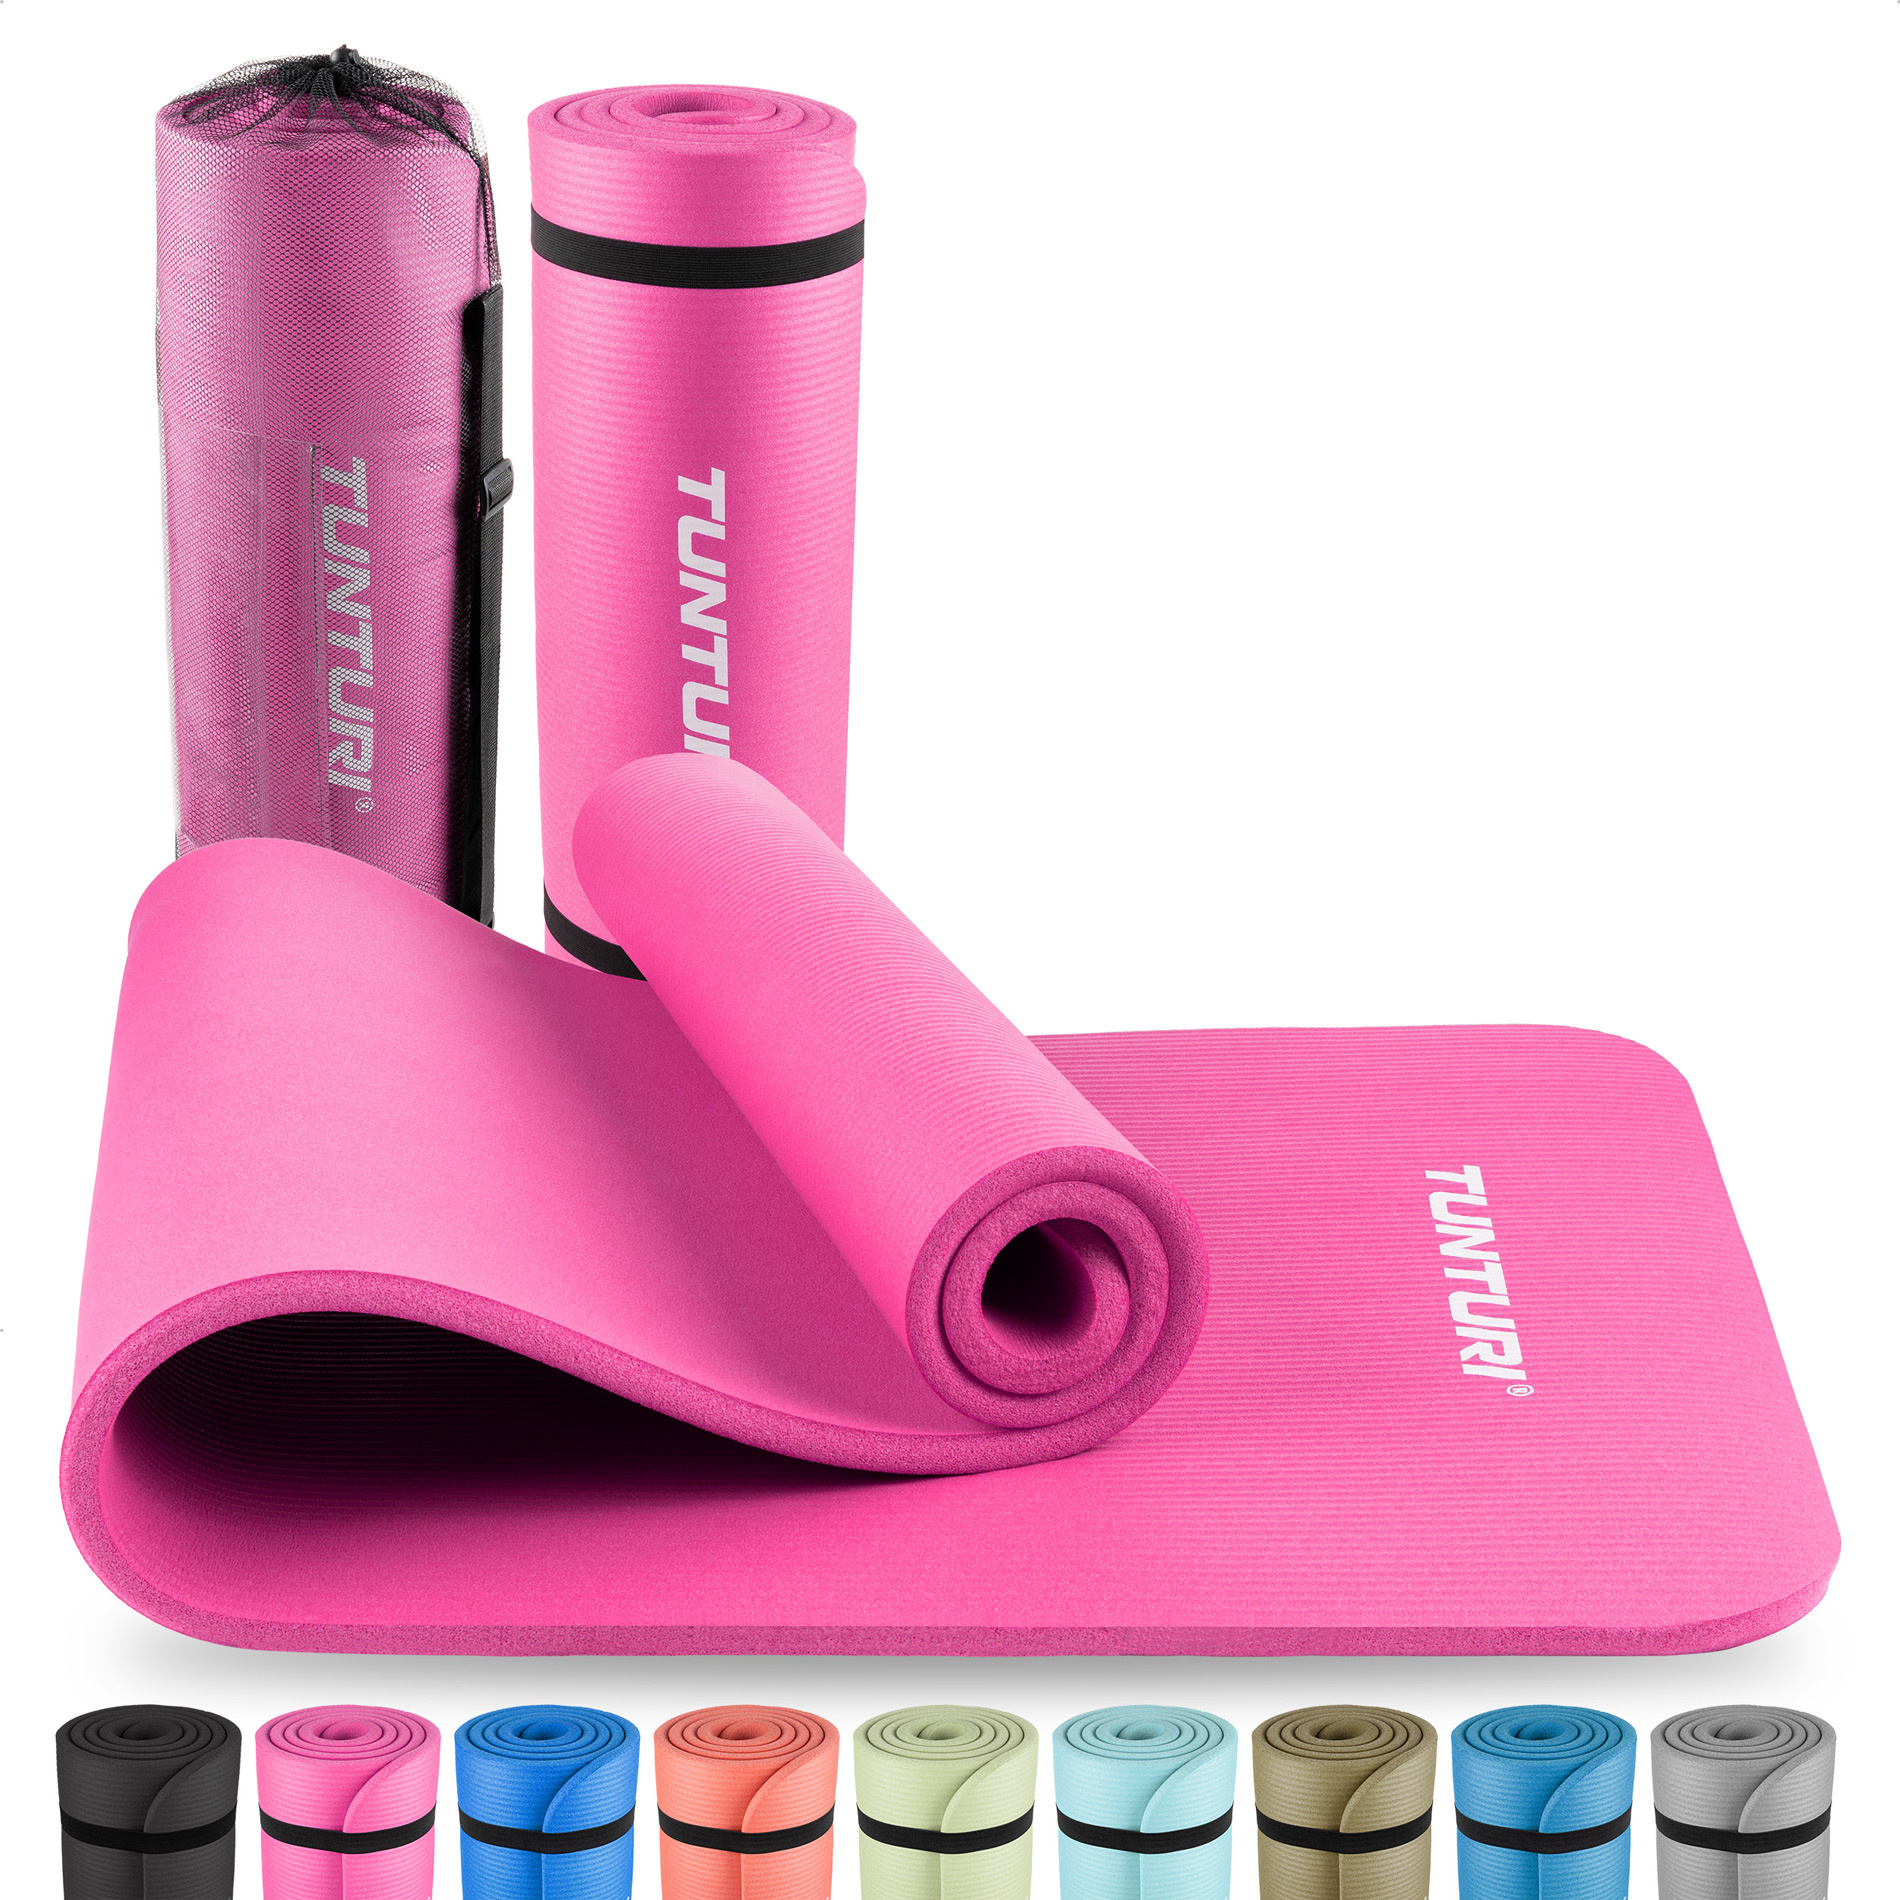 Fitnessmat NBR 15mm - With carry bag - Pink - Tunturi New Fitness B.V.